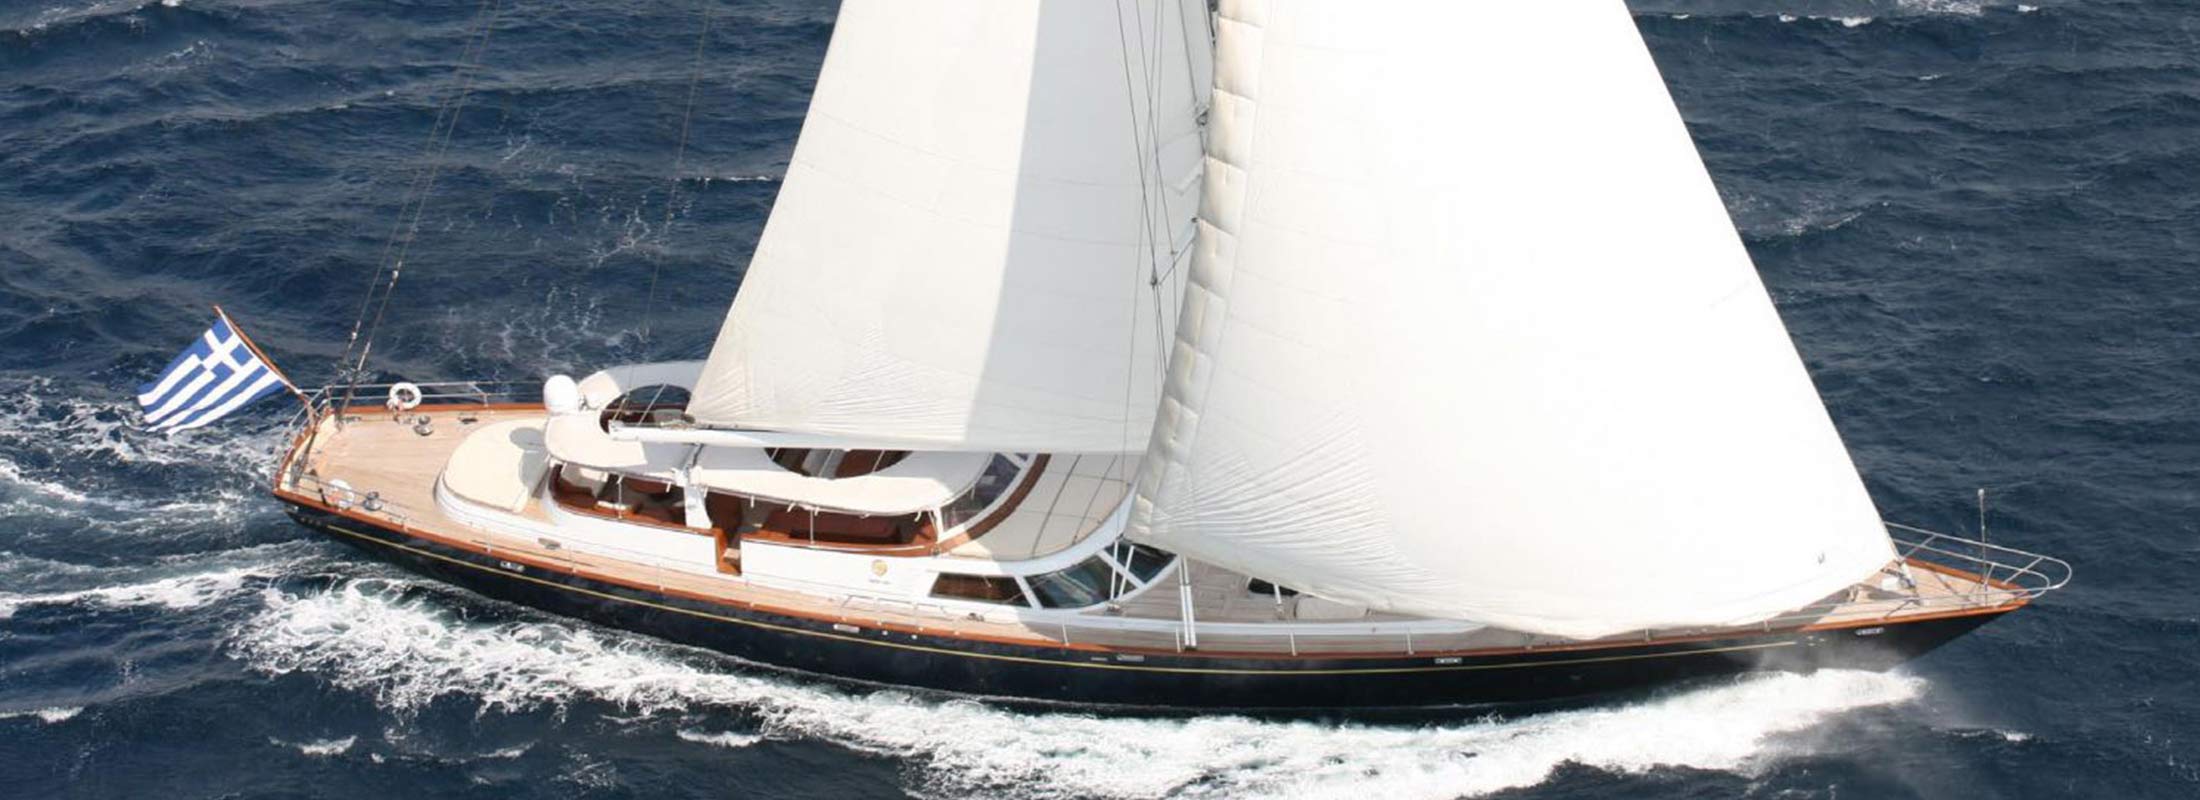 Gitana Sailing Yacht for Charter Mediterranean slider 1 